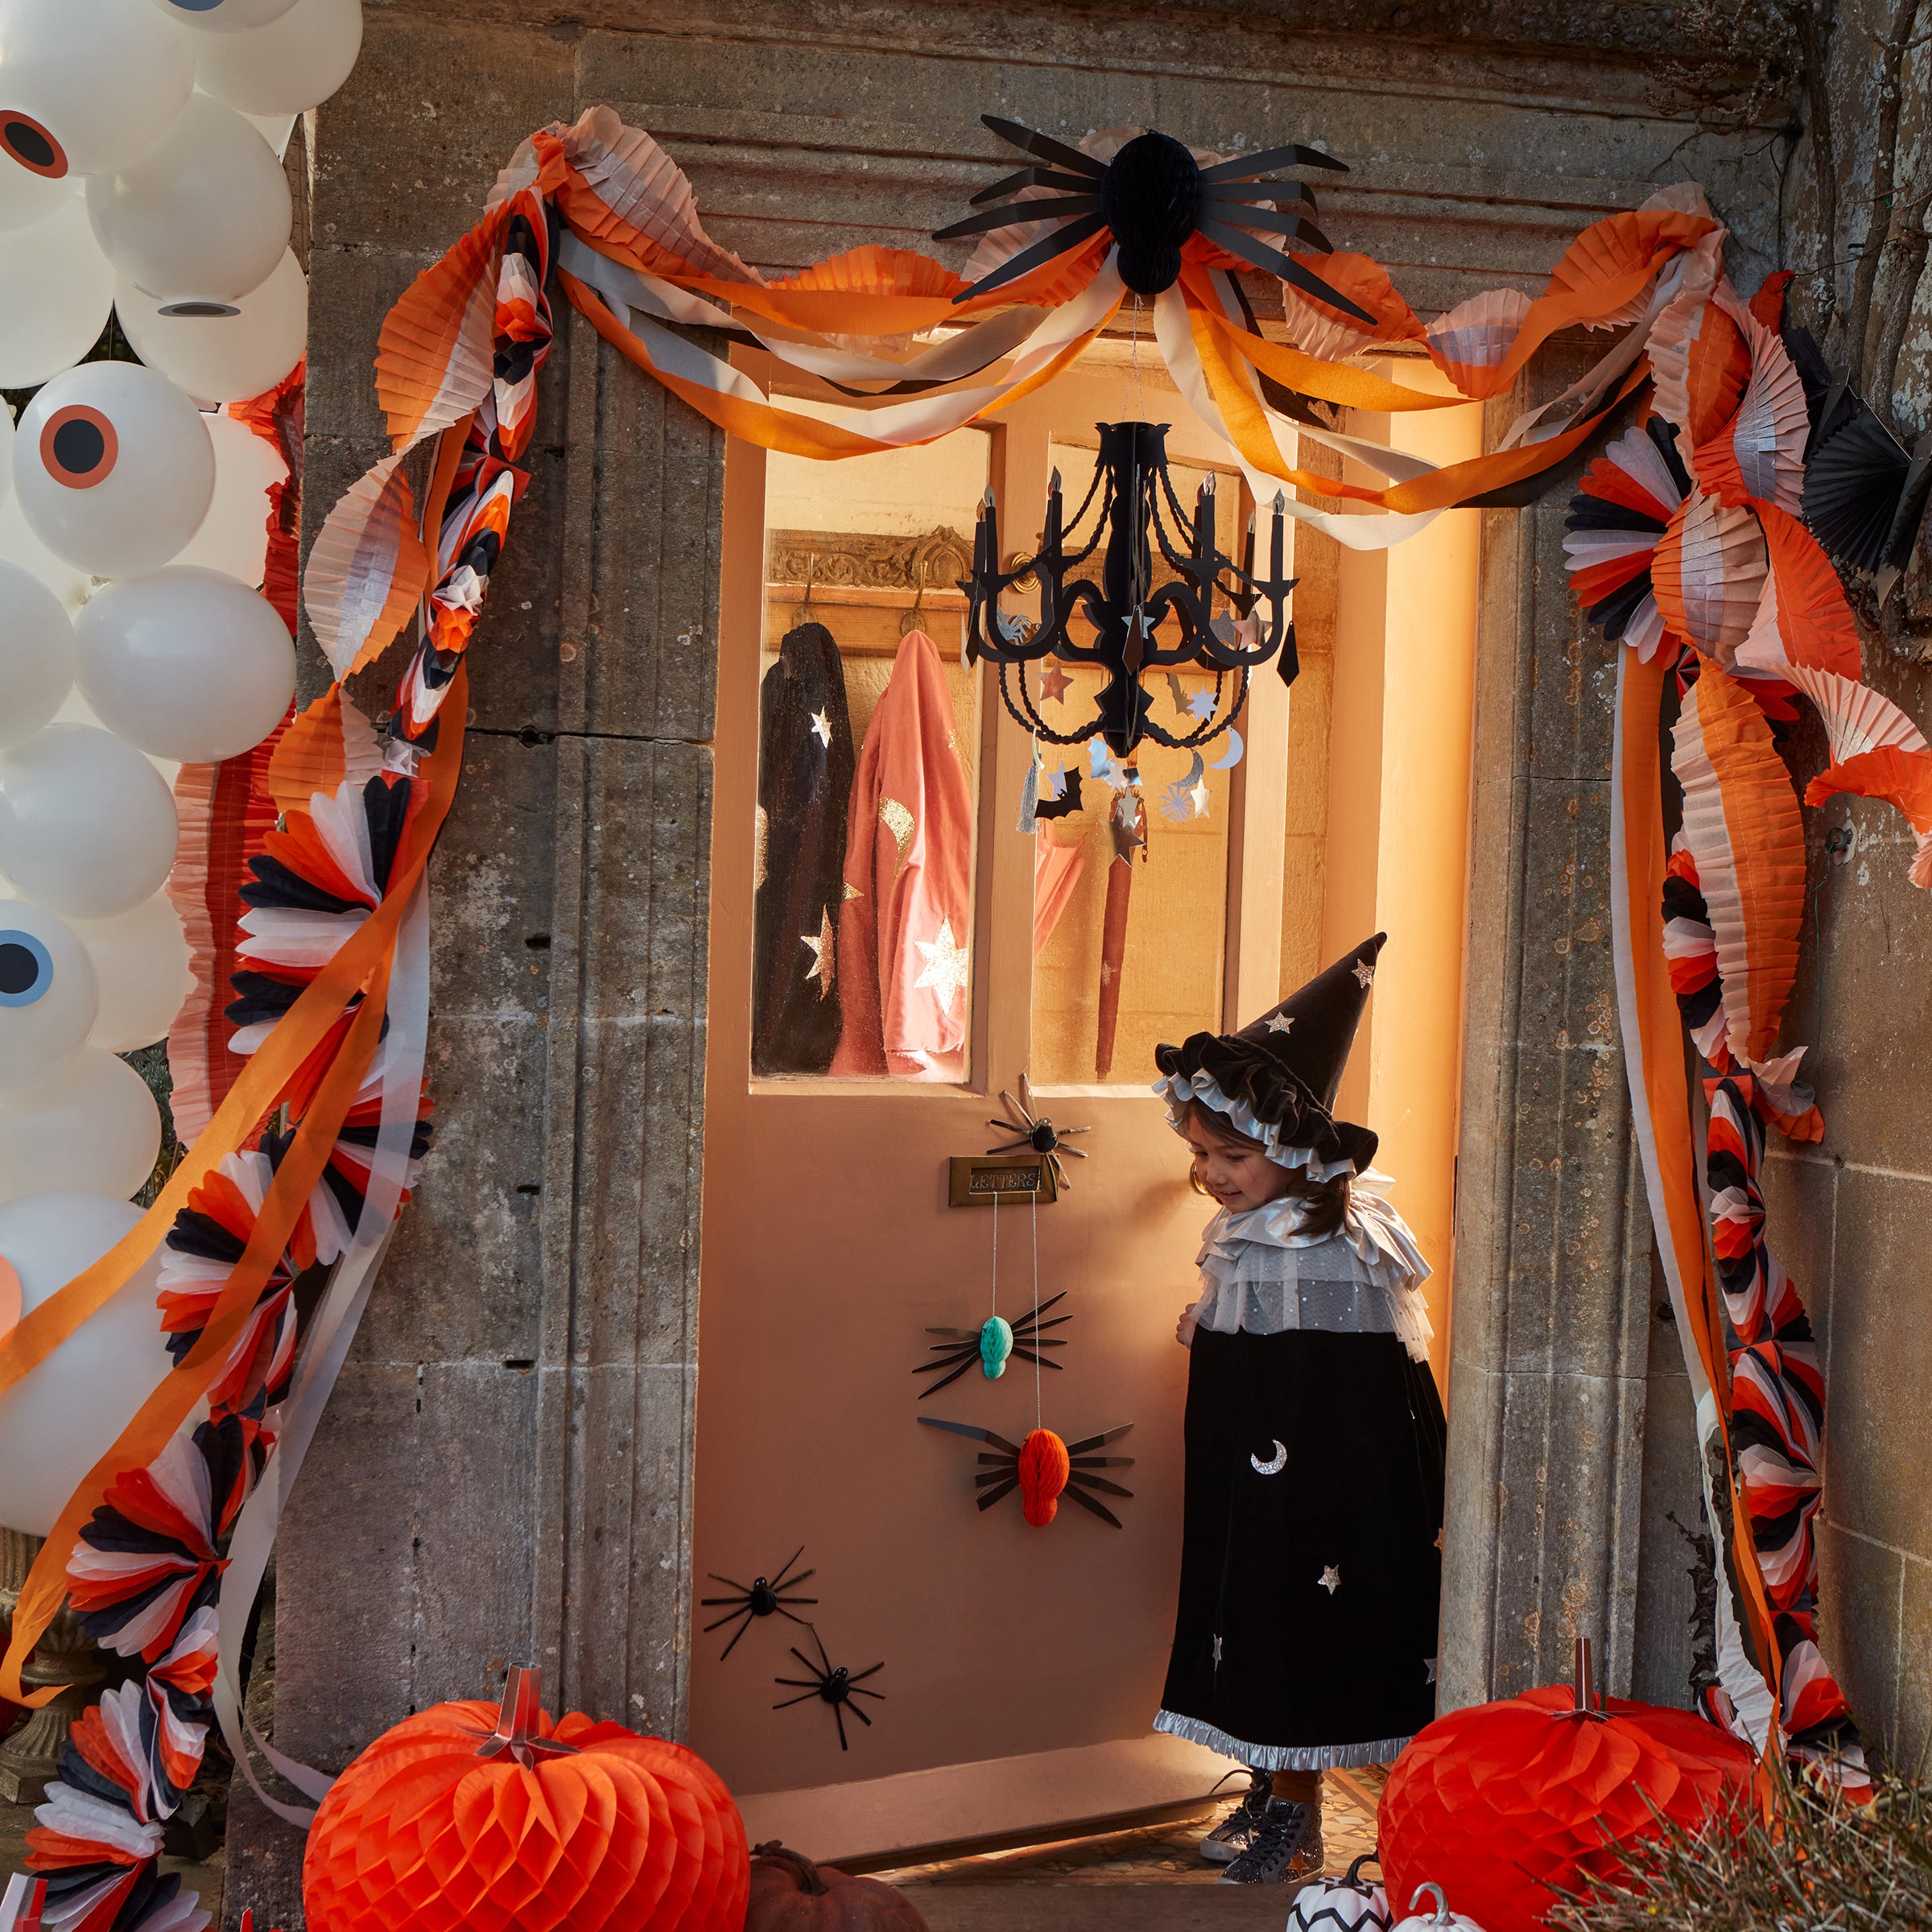 Meri Meri - Easter Honeycomb Decorations - Little Zebra